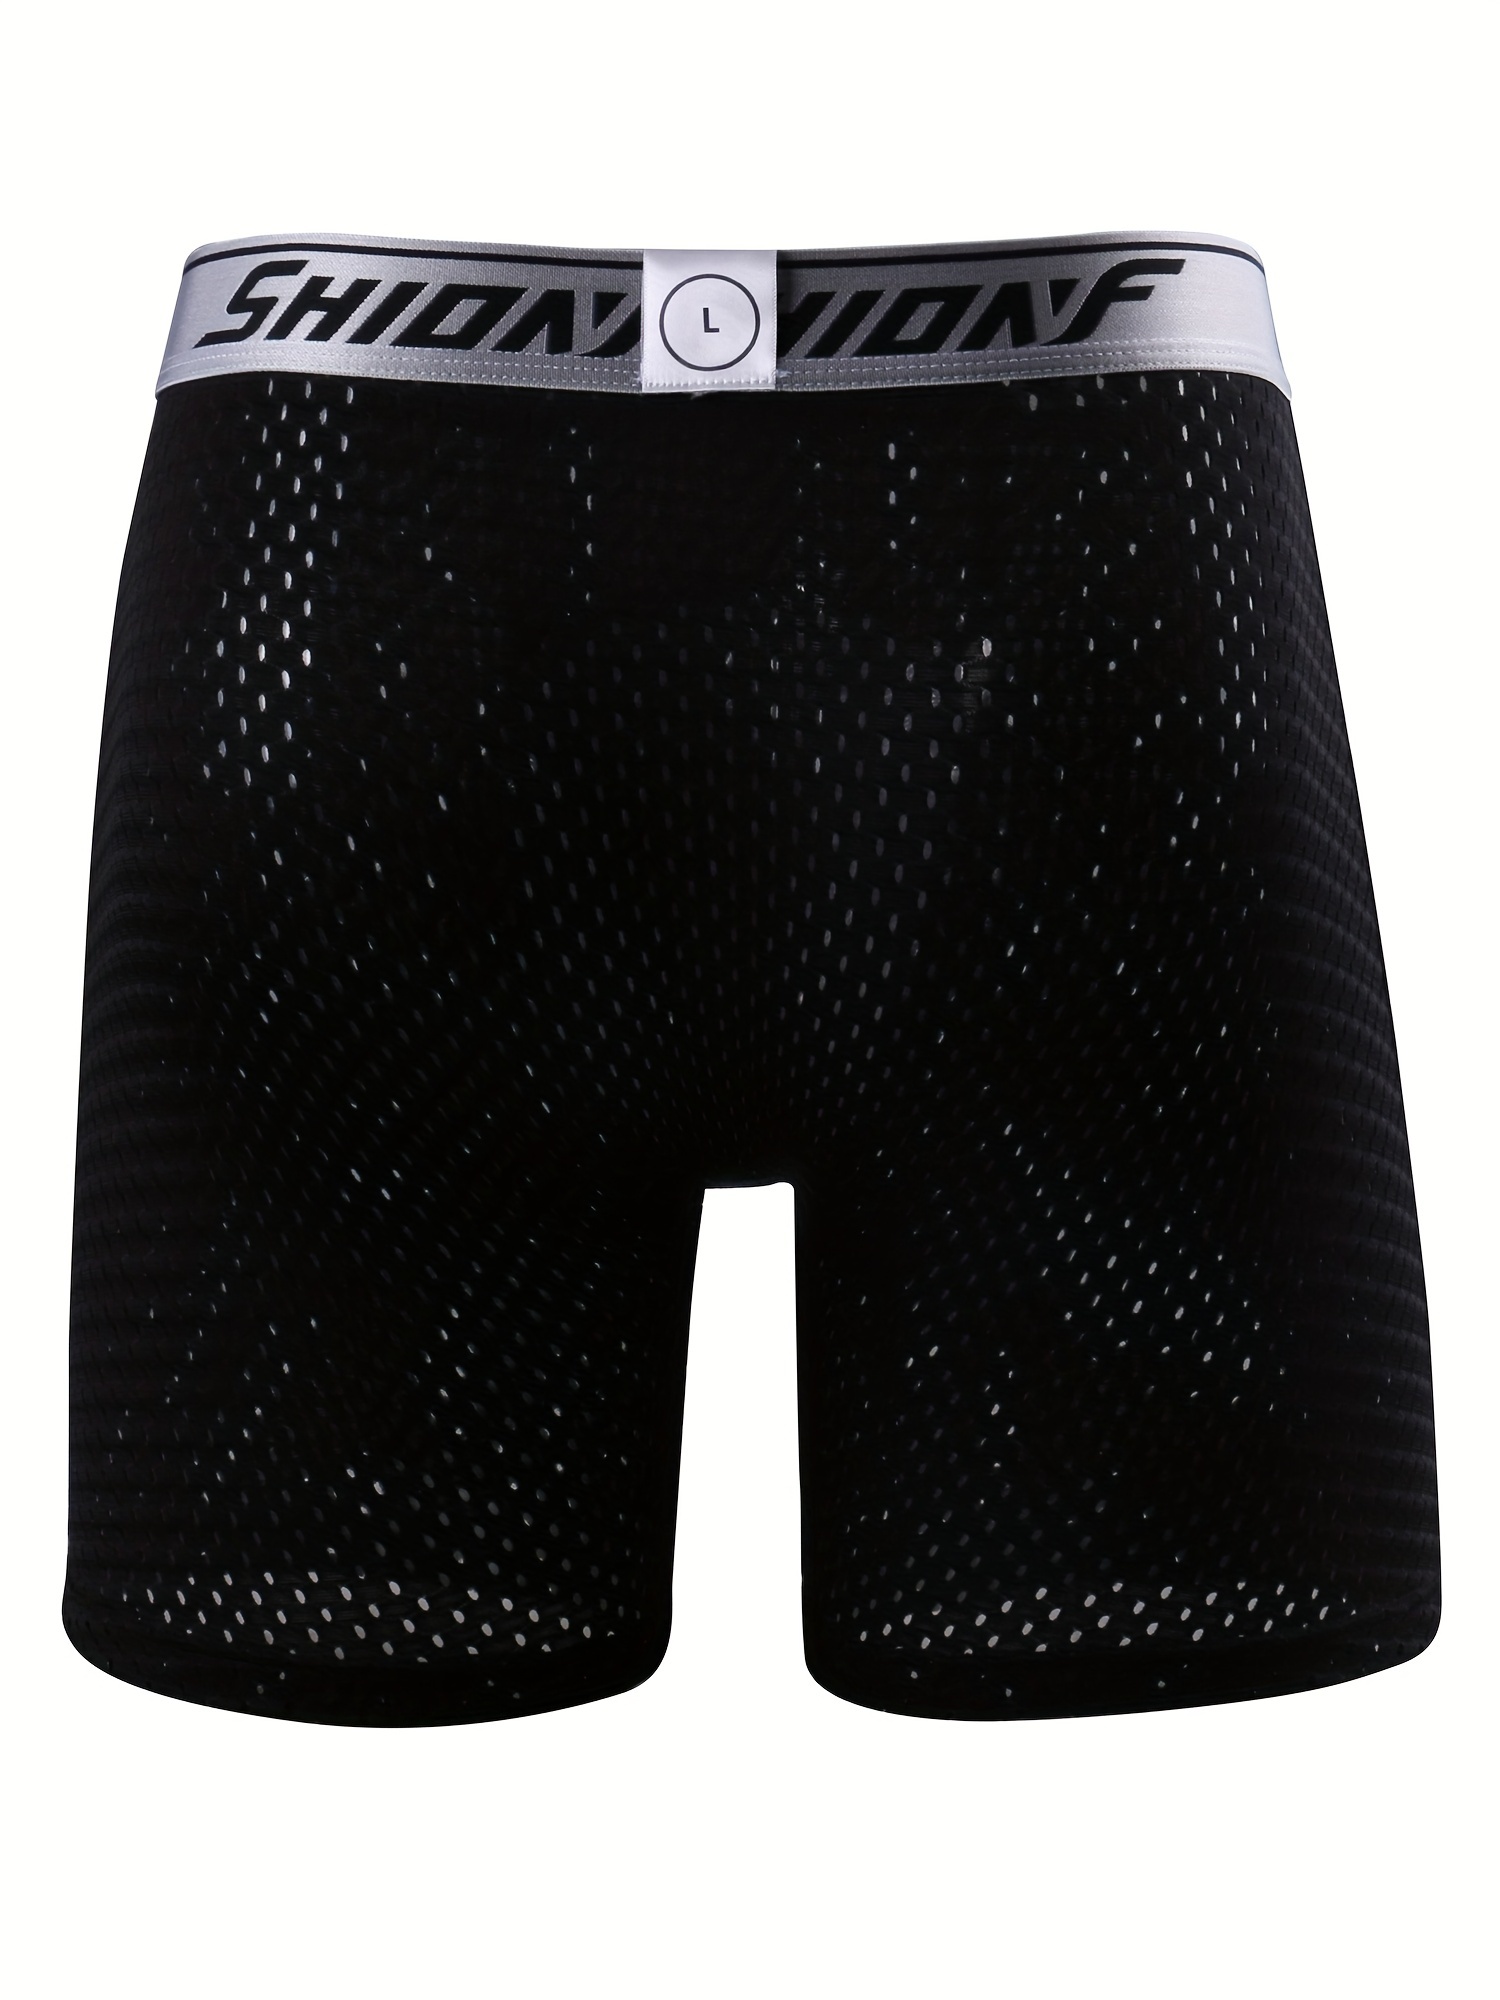 Men Sexy Underpants Sports Boxers Underwear Black Gray L XL XXL